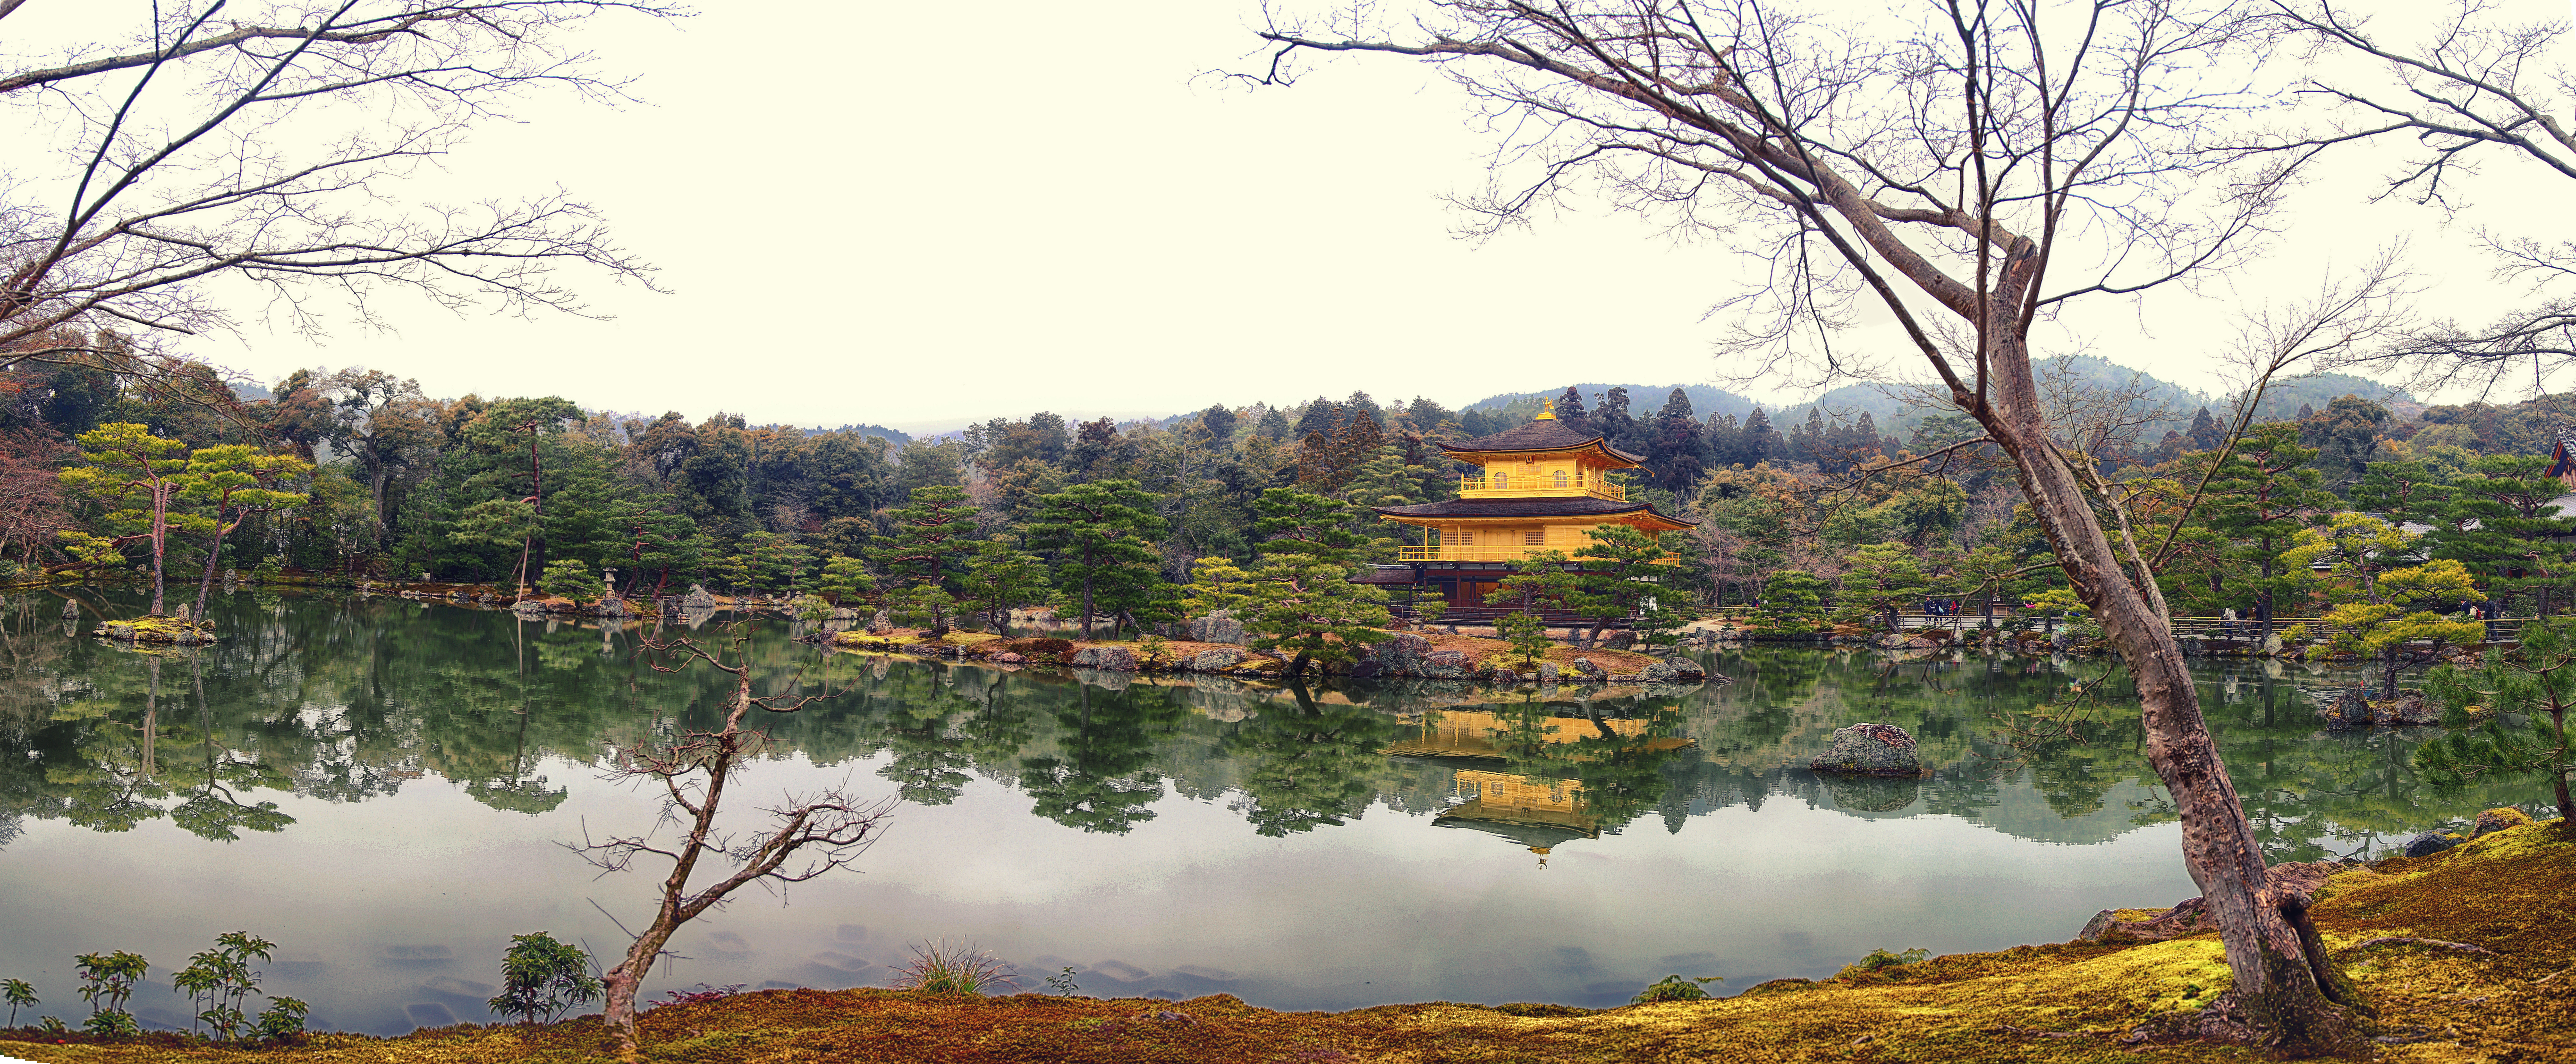 Kinkaku Ji Kyoto Japan The Temple Of The Golden Pavilion Golden Temple Landscape Nature Reflection 10781x4453